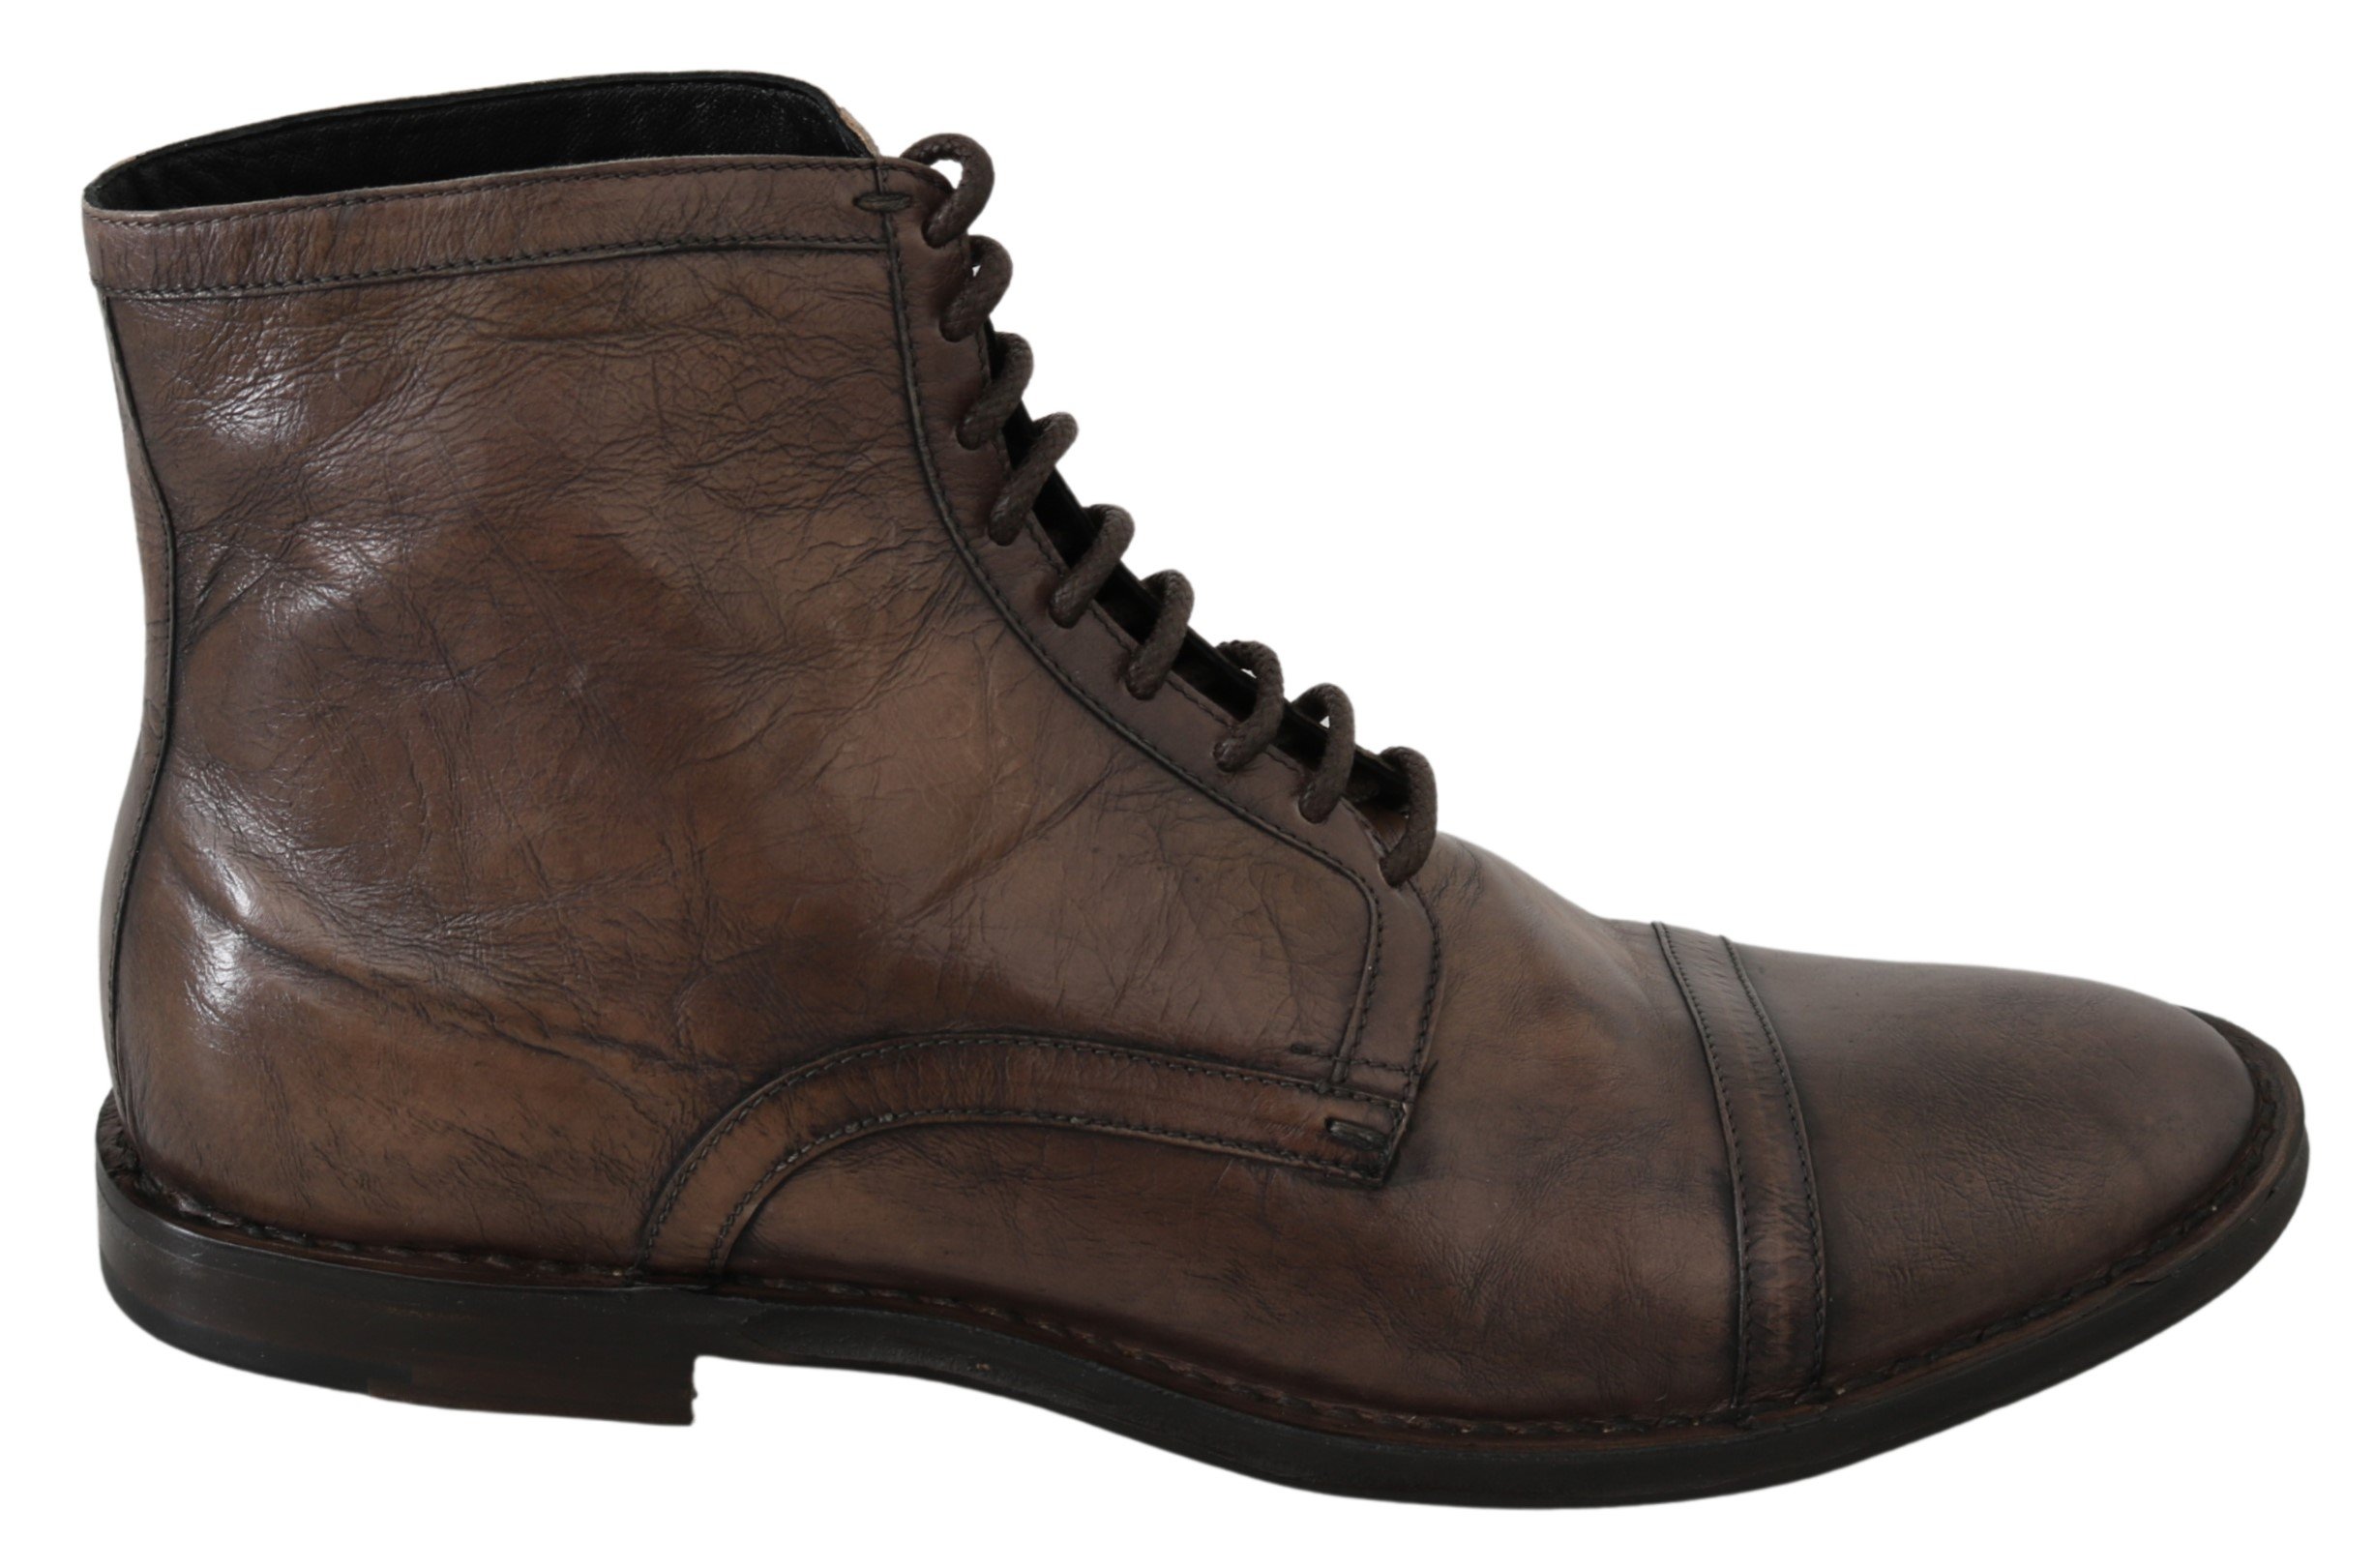 Dolce & Gabbana Men's Patterned Leather Derby Boots Brown MV3059 - EU44/US11